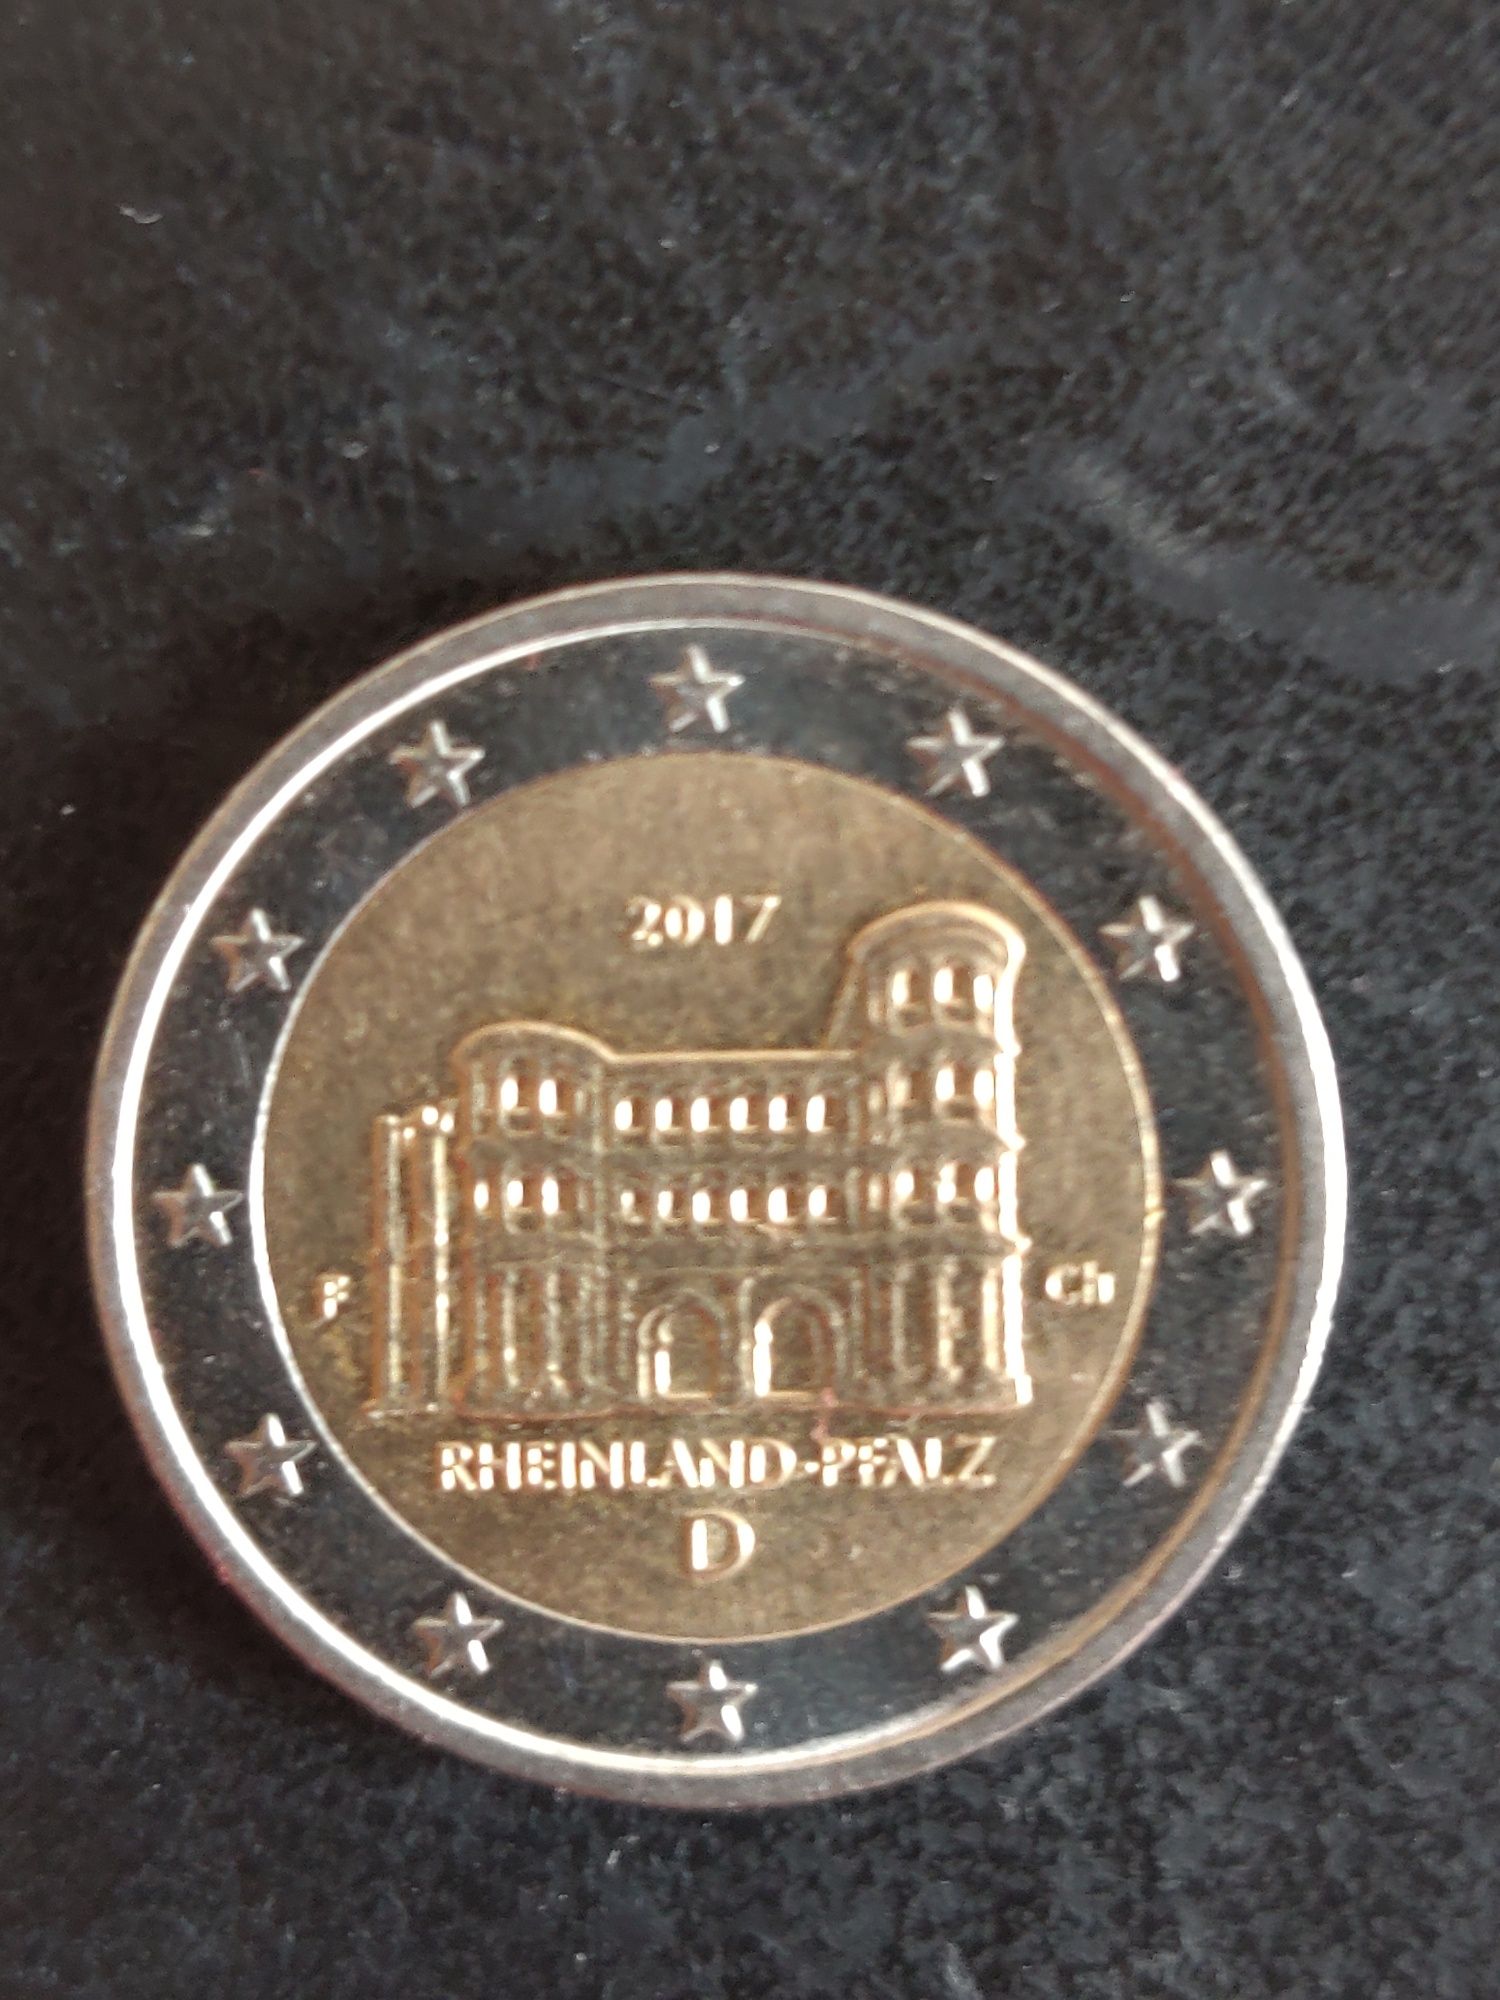 Monede EURO pt. colecție (Andorra, Germania, Franța, Austria)